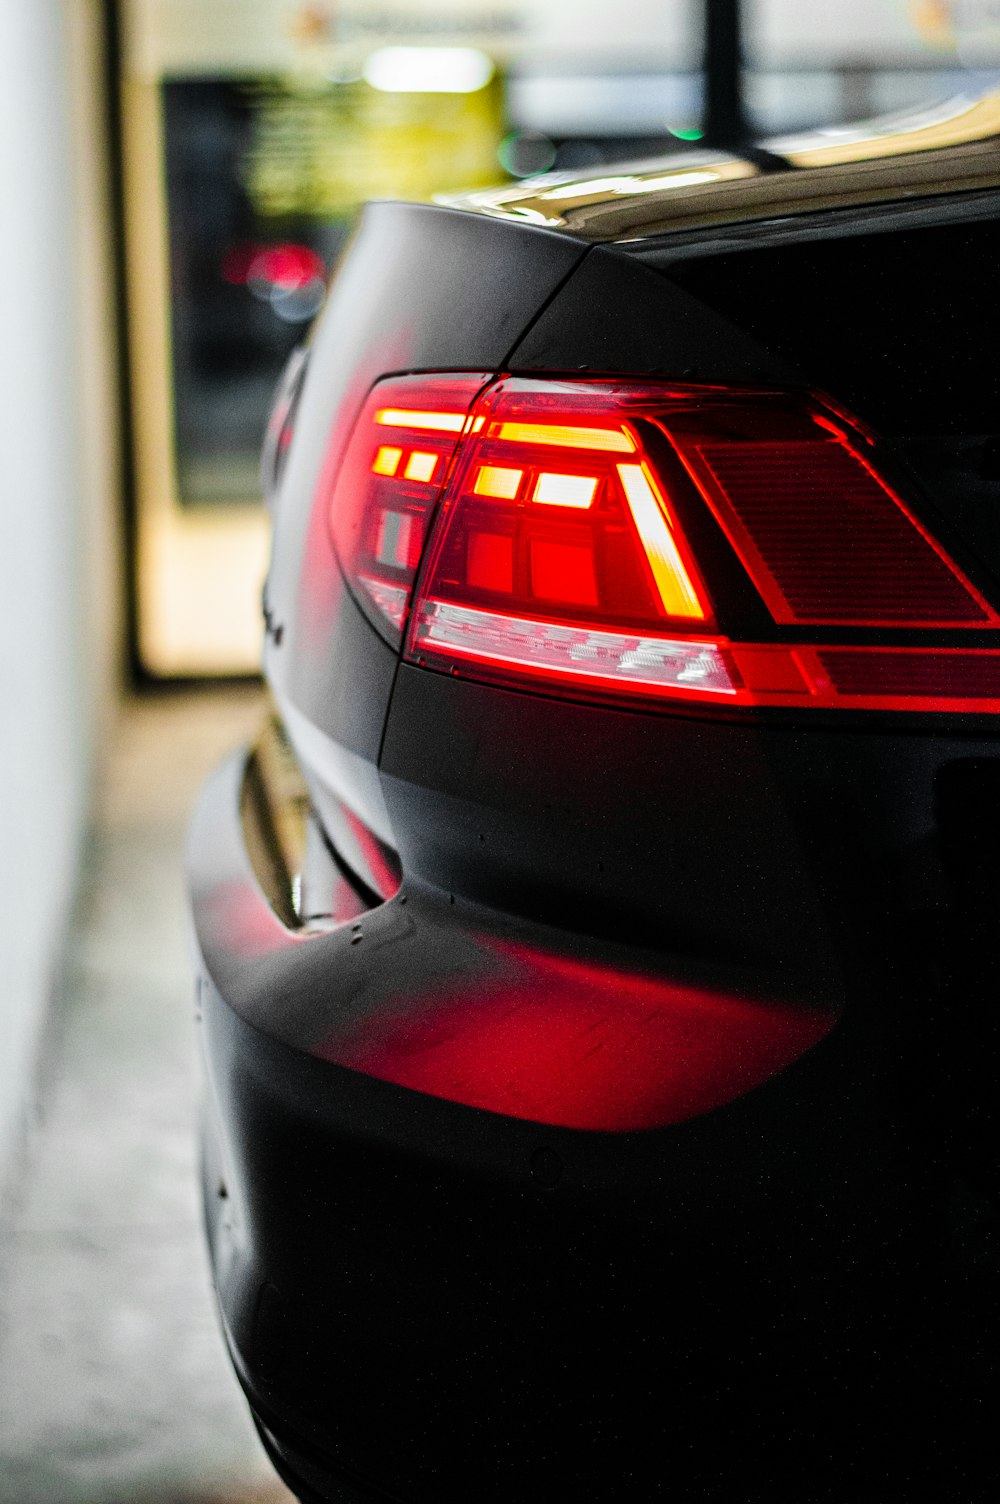 a close up of a car's tail light